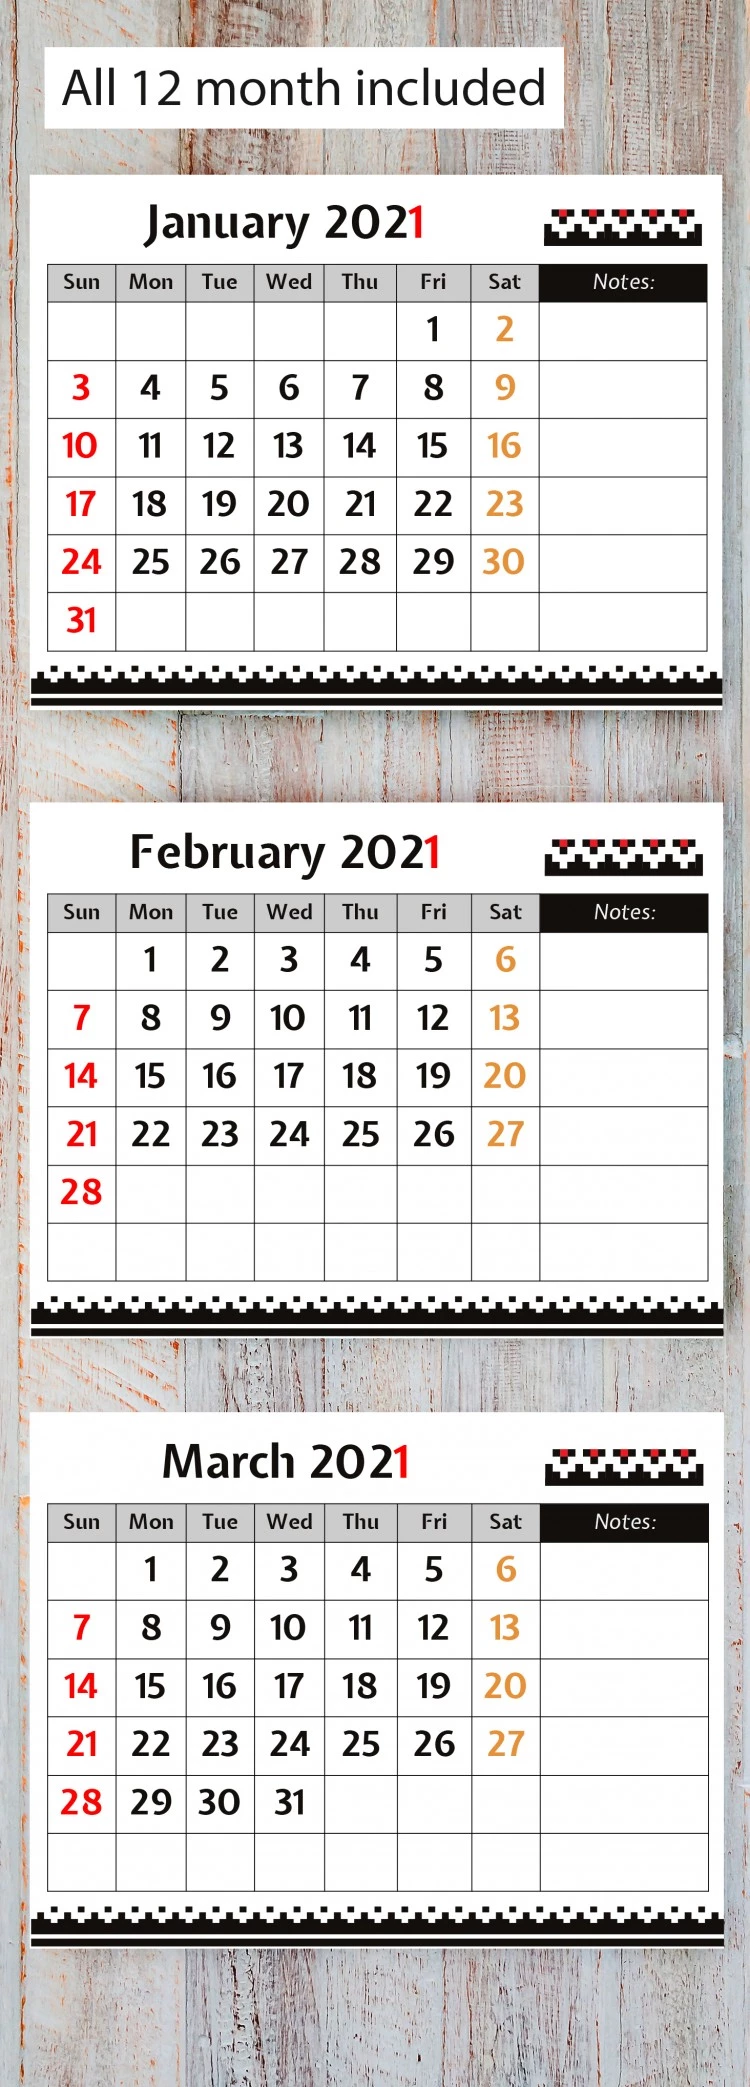 Calendario mensile speciale 2021 - free Google Docs Template - 10061806